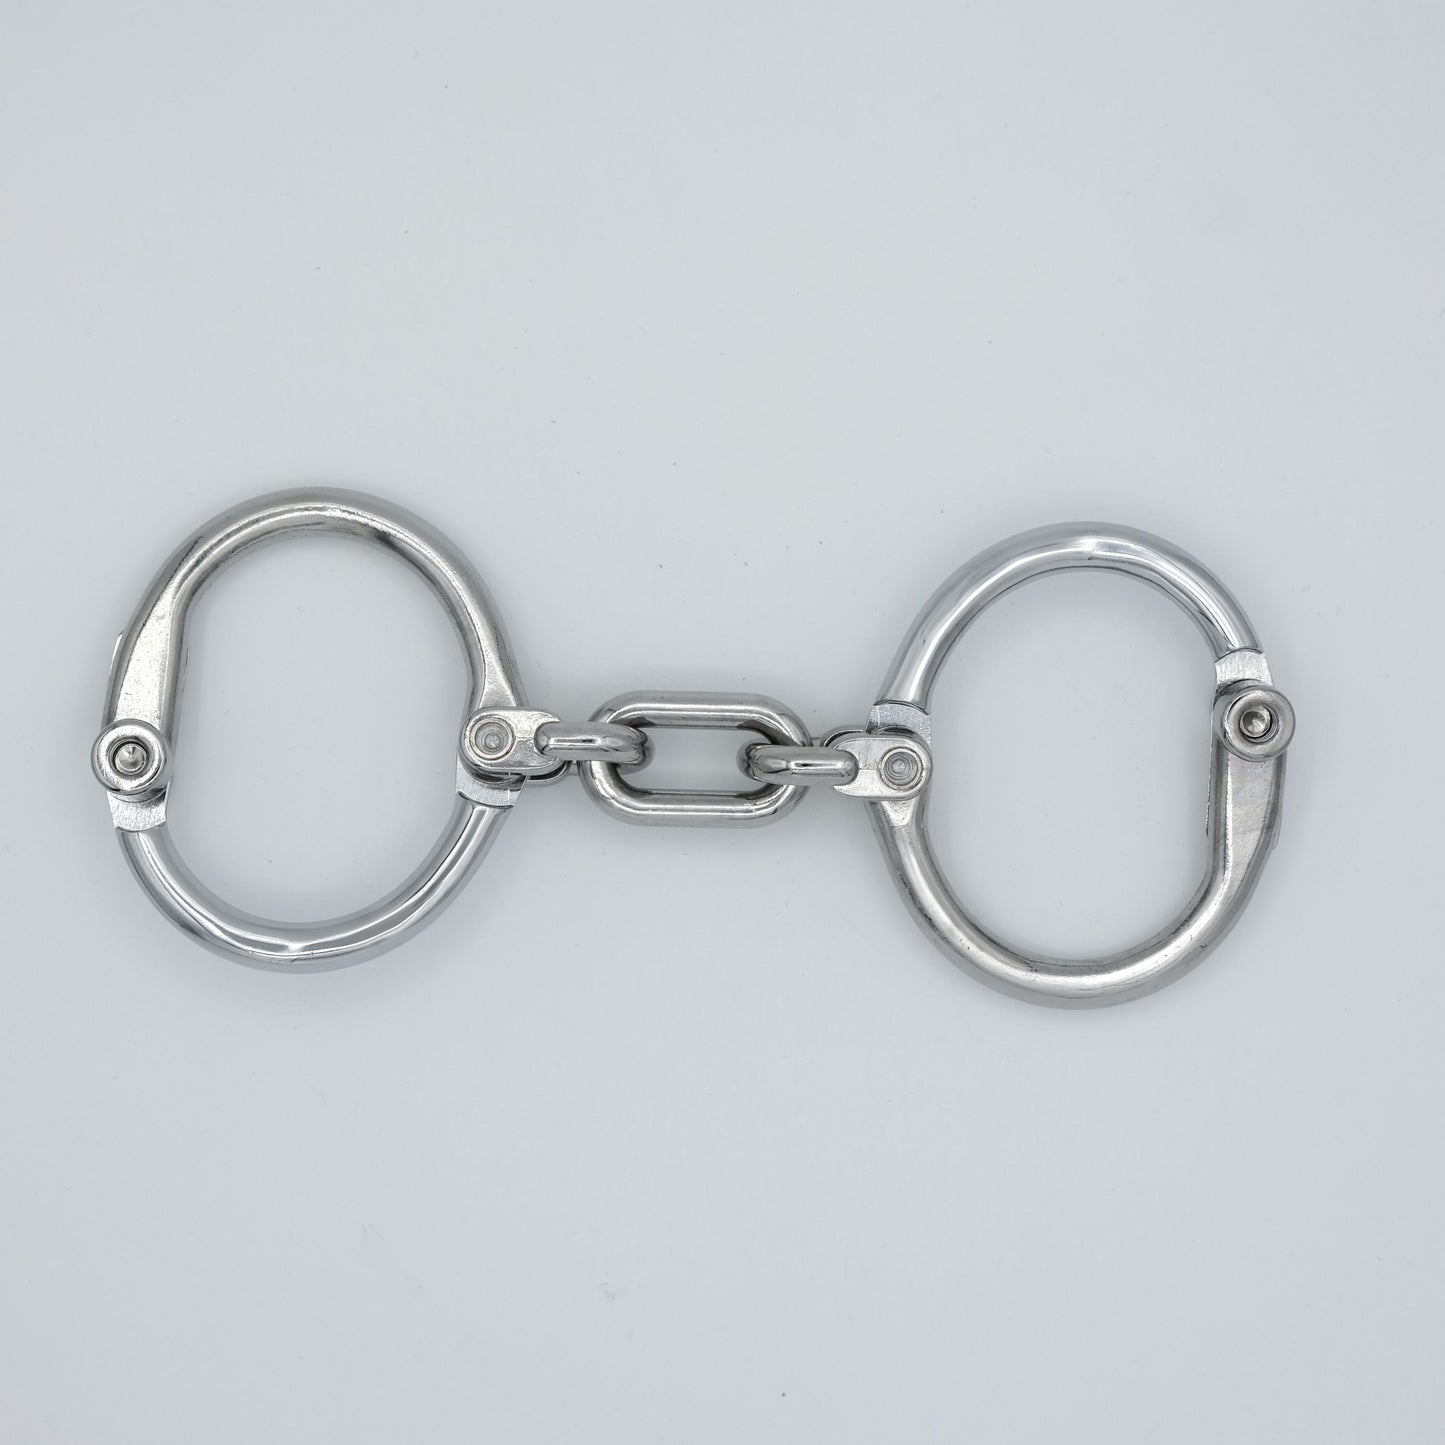 Innovative solid handcuffs, adjustable